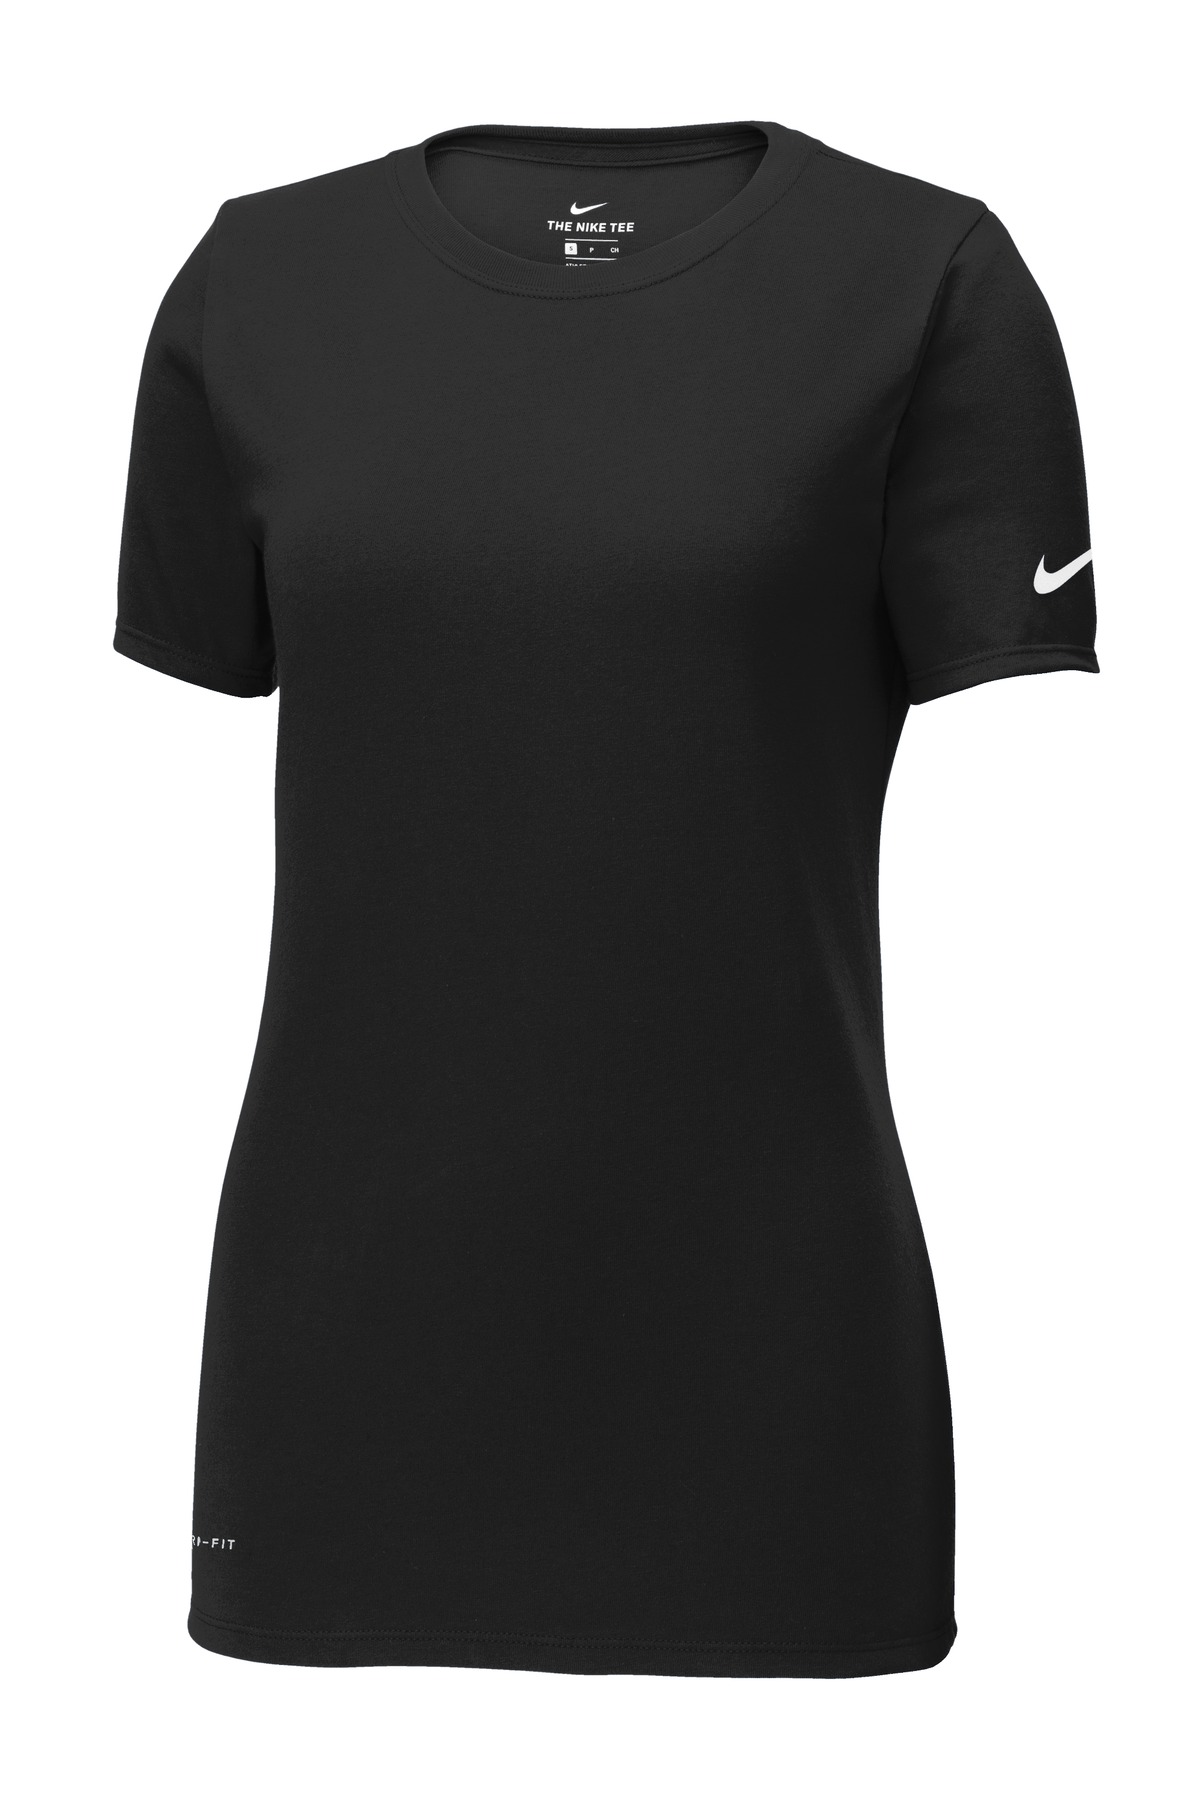 Nike Ladies Dri-FIT Cotton/Poly Scoop Neck Tee. NKBQ5234 - Custom Shirt ...